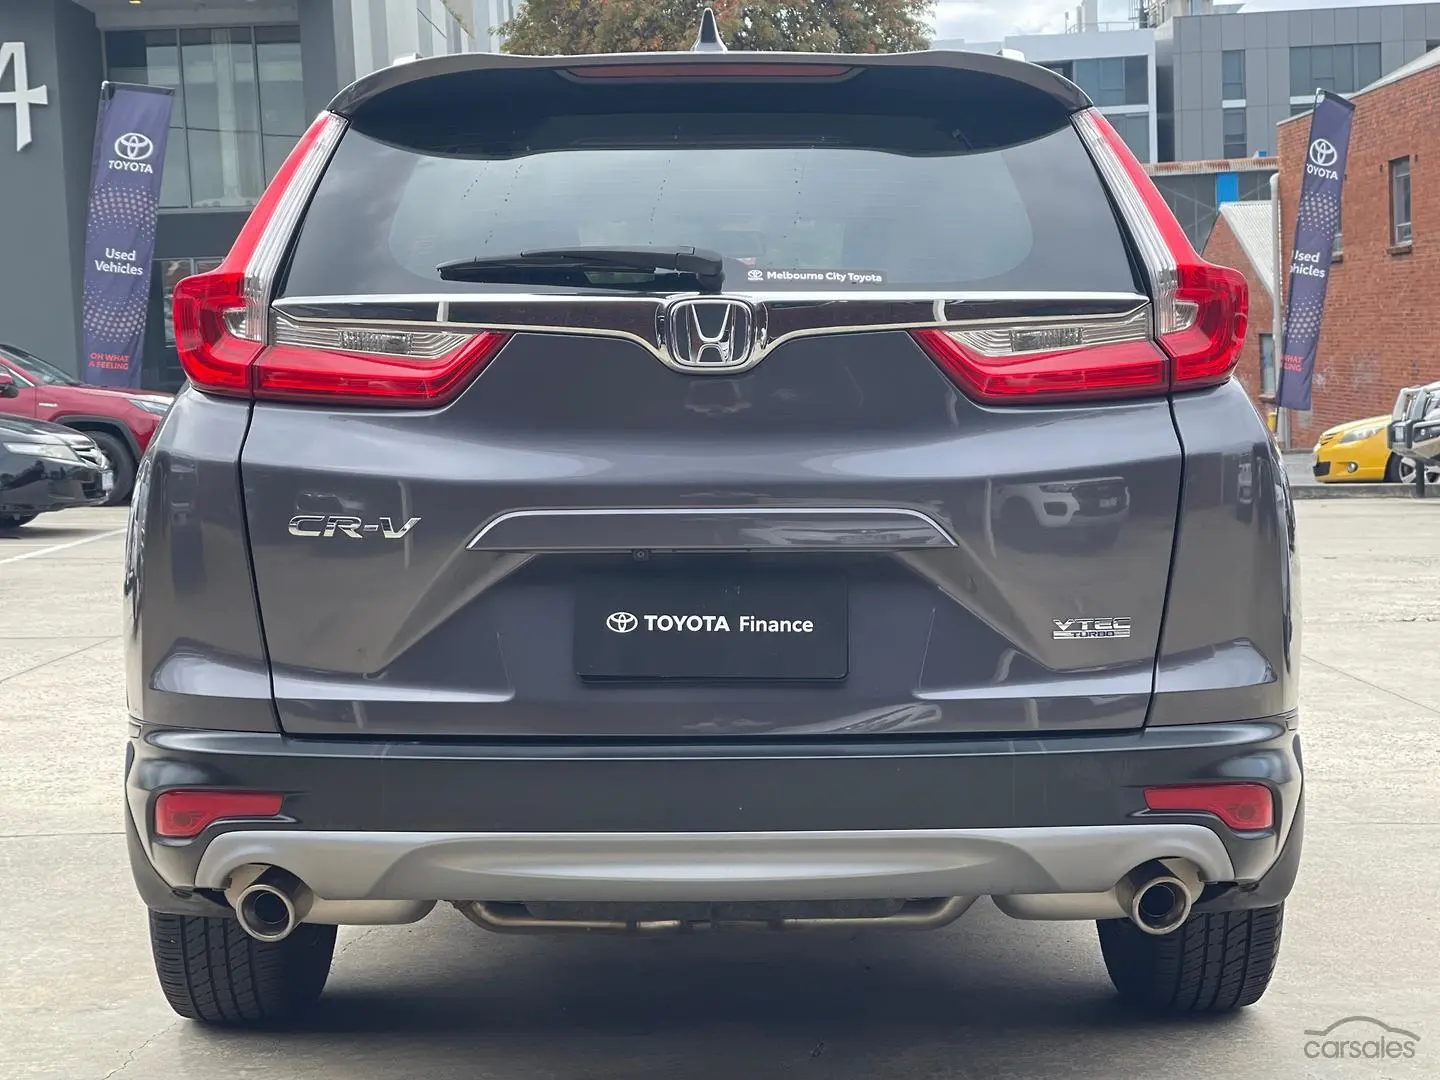 2018 Honda CR-V Image 6